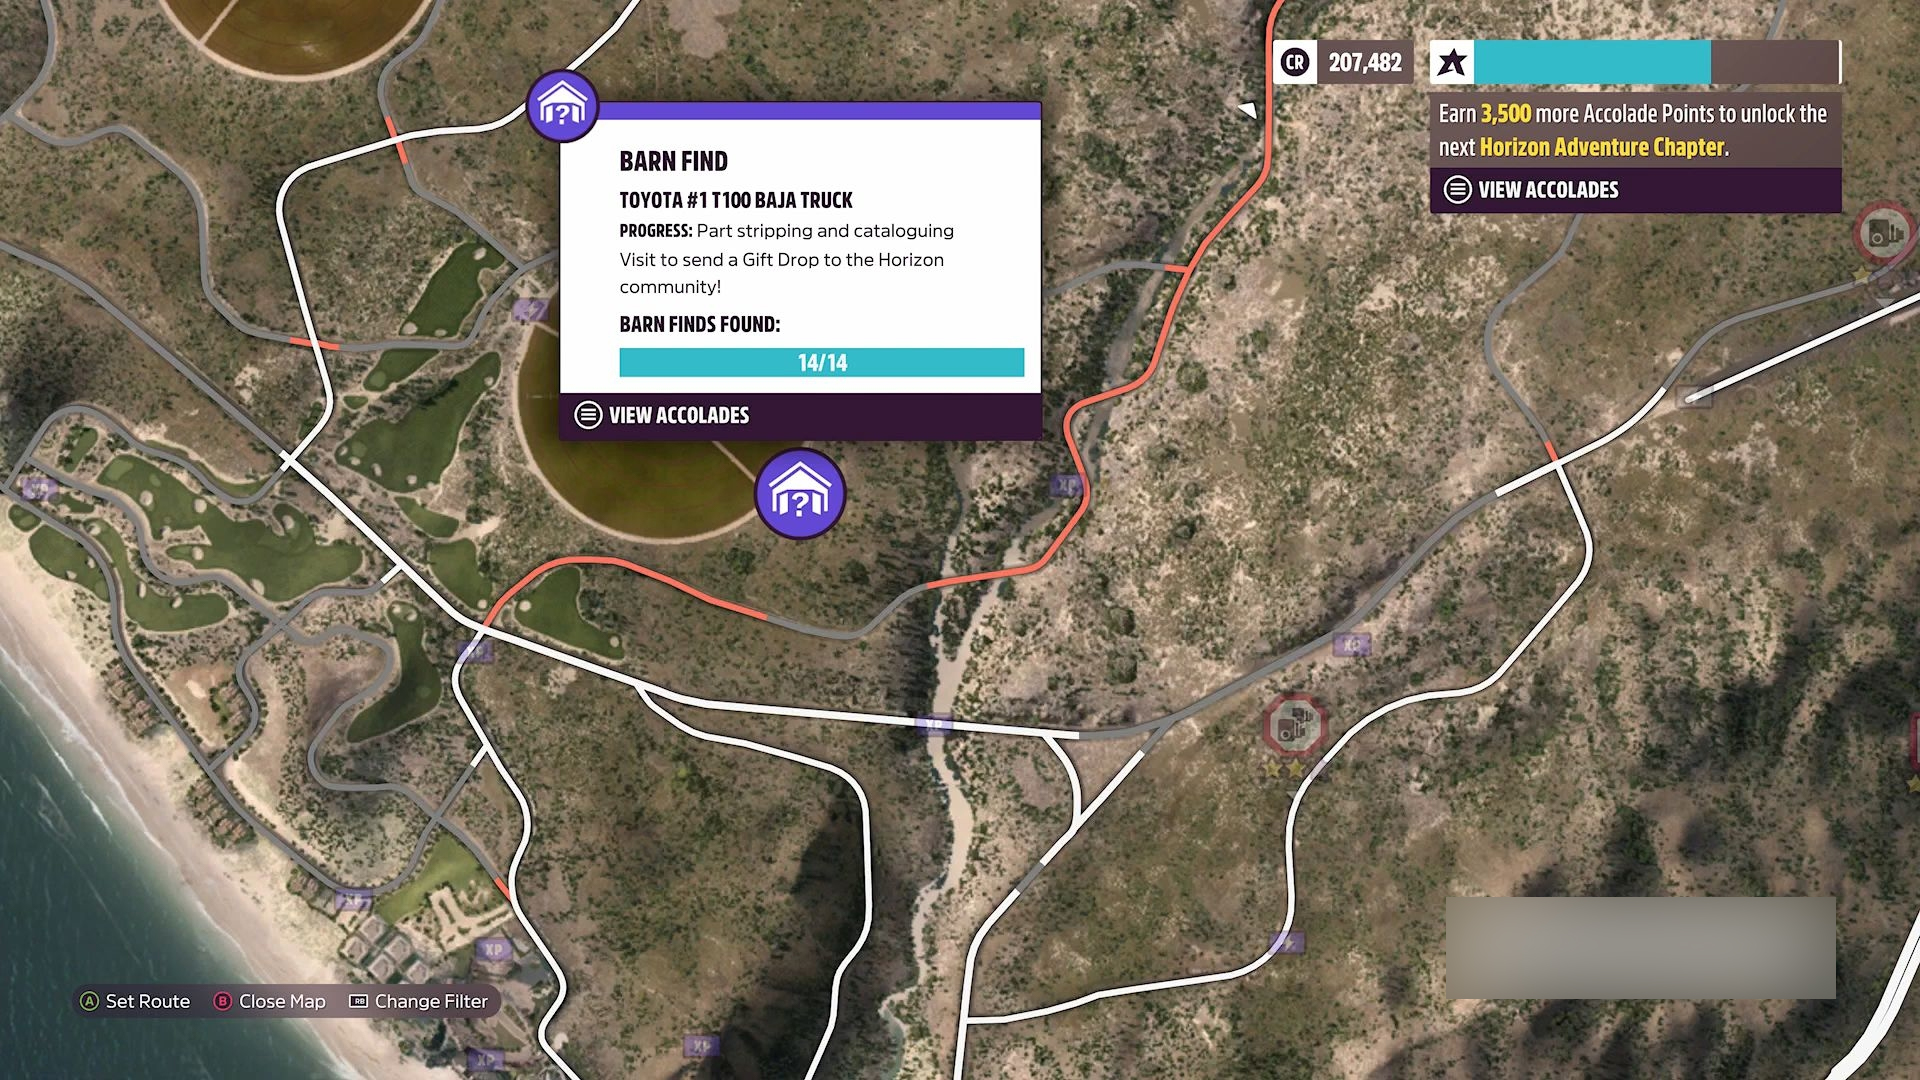 Forza Horizon 5 All Barns Complete Locations Map Guide - Barn Find 1 - 4D056DA